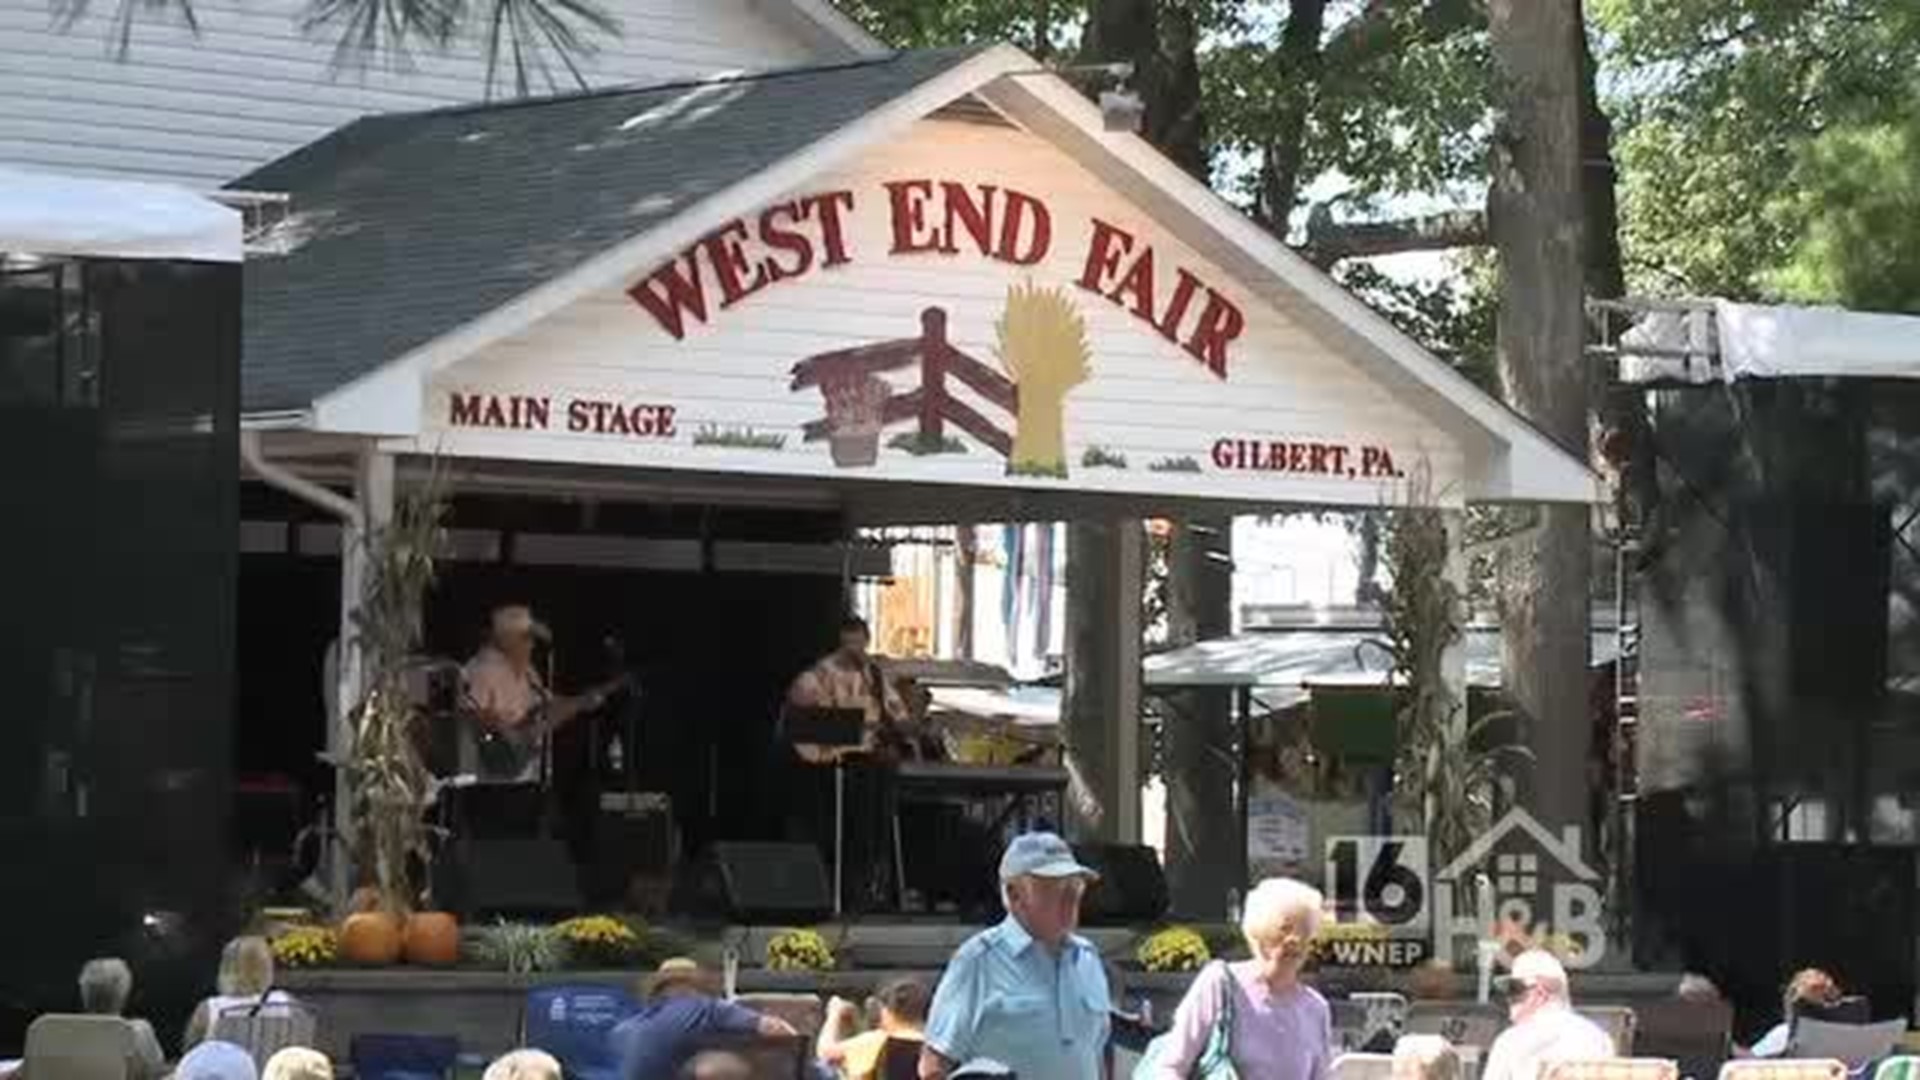 Monroe County’s West End Fair